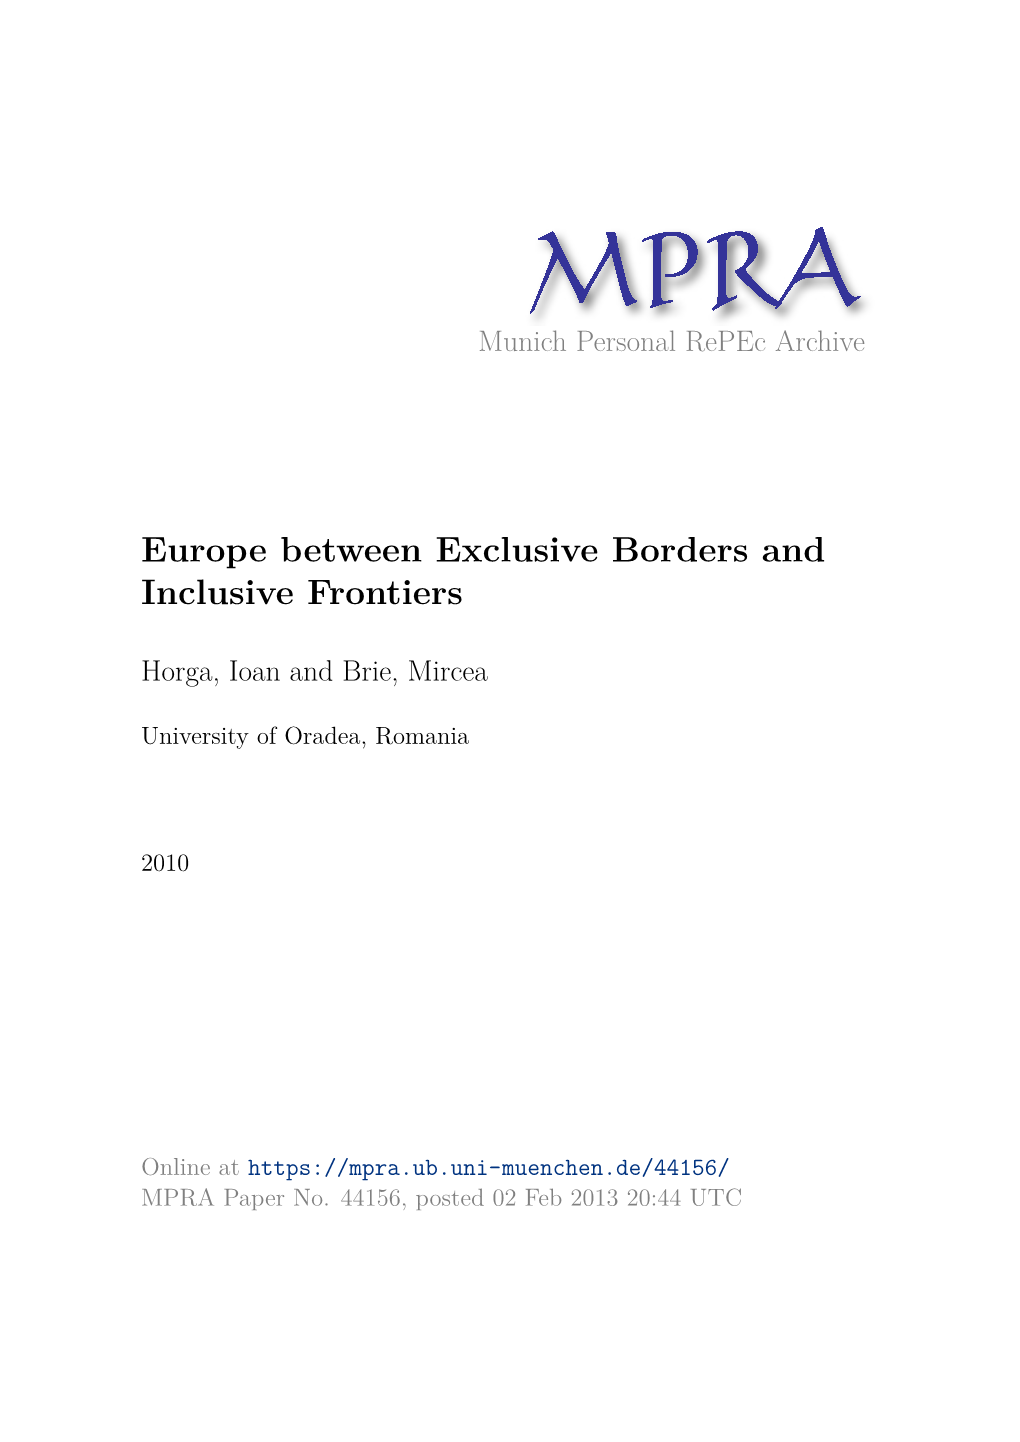 Europe Between Exclusive Borders and Inclusive Frontiers